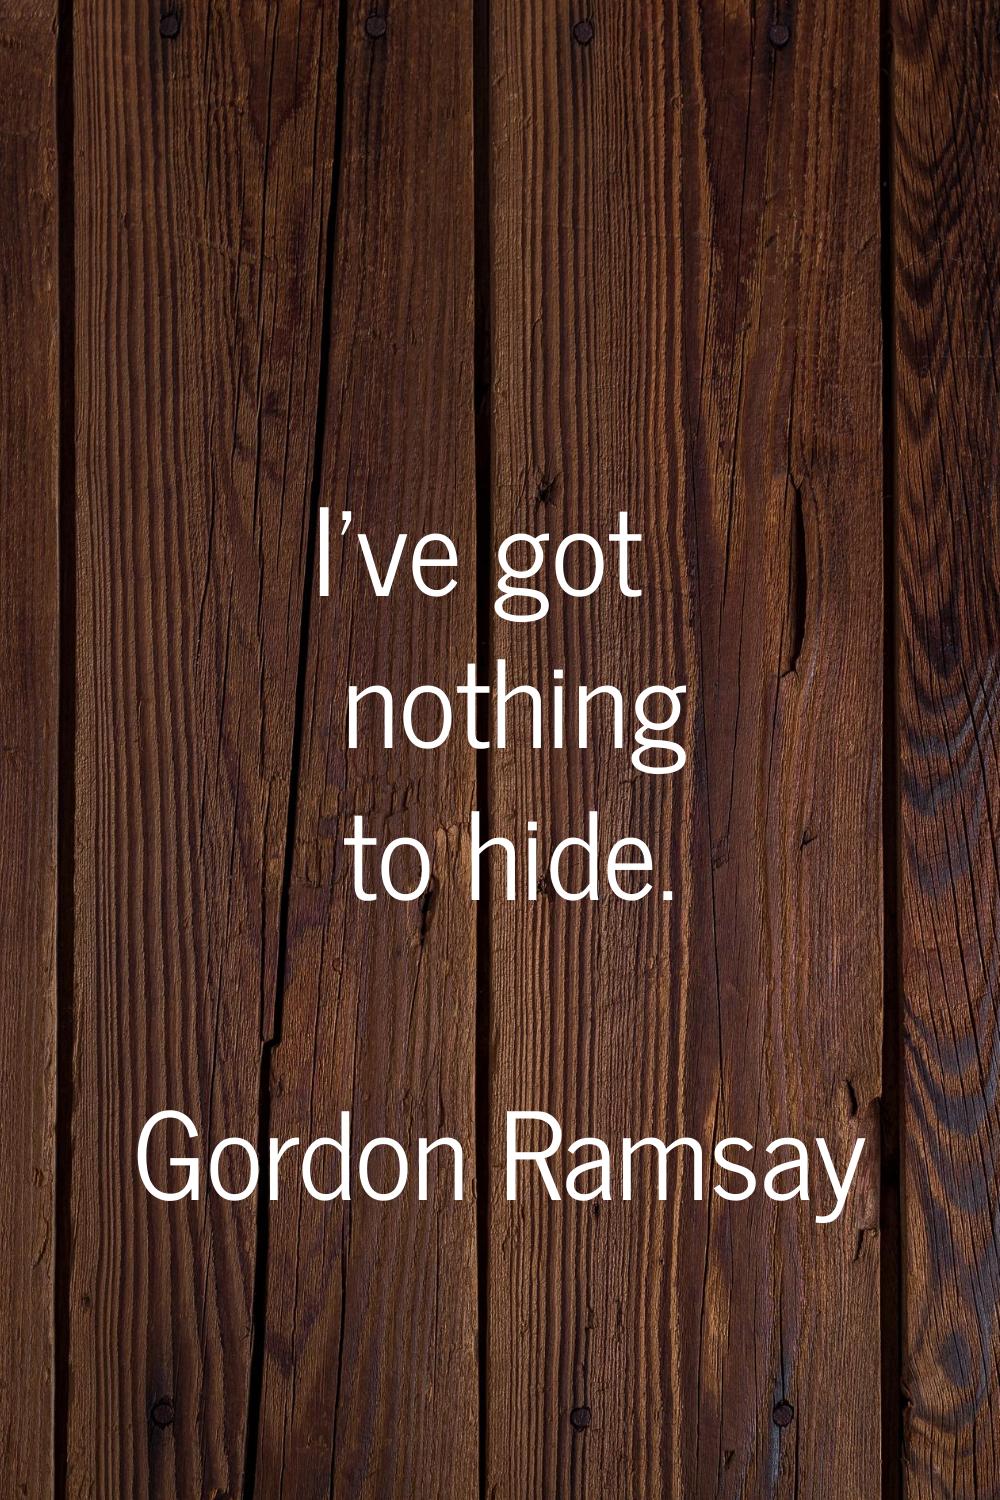 I've got nothing to hide.